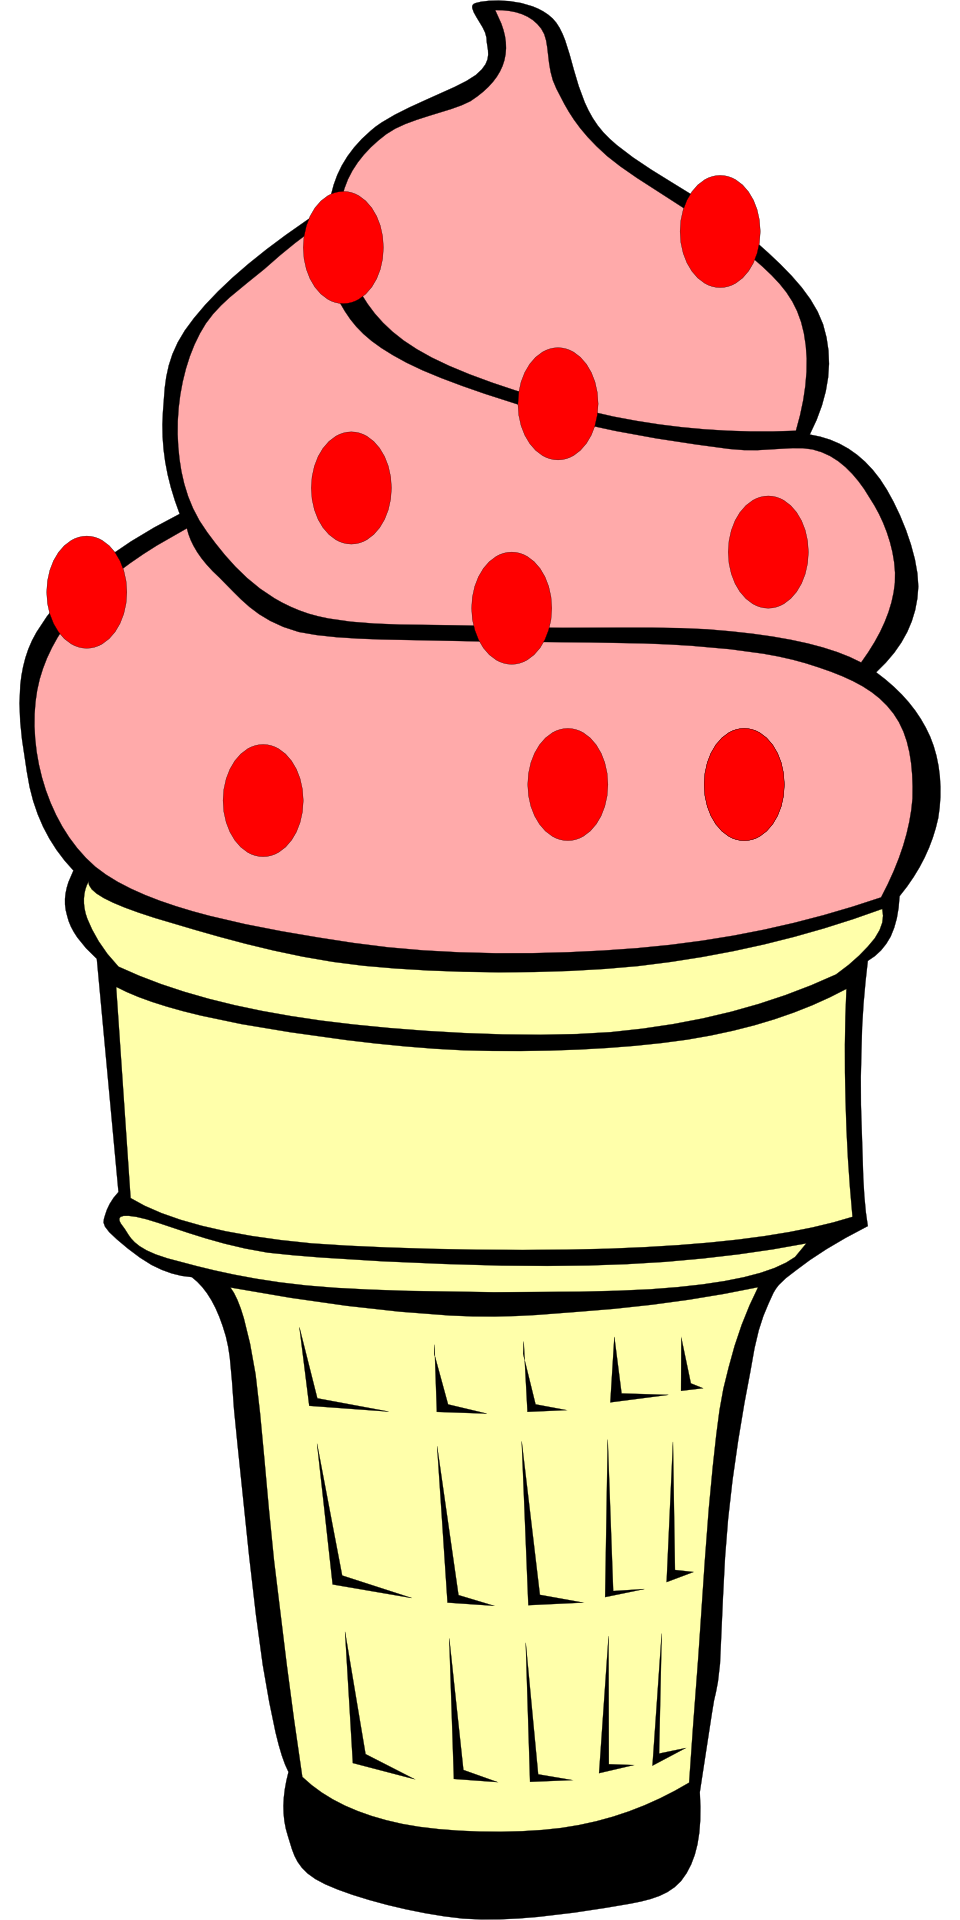 Ice cream cone waffle drawing free image